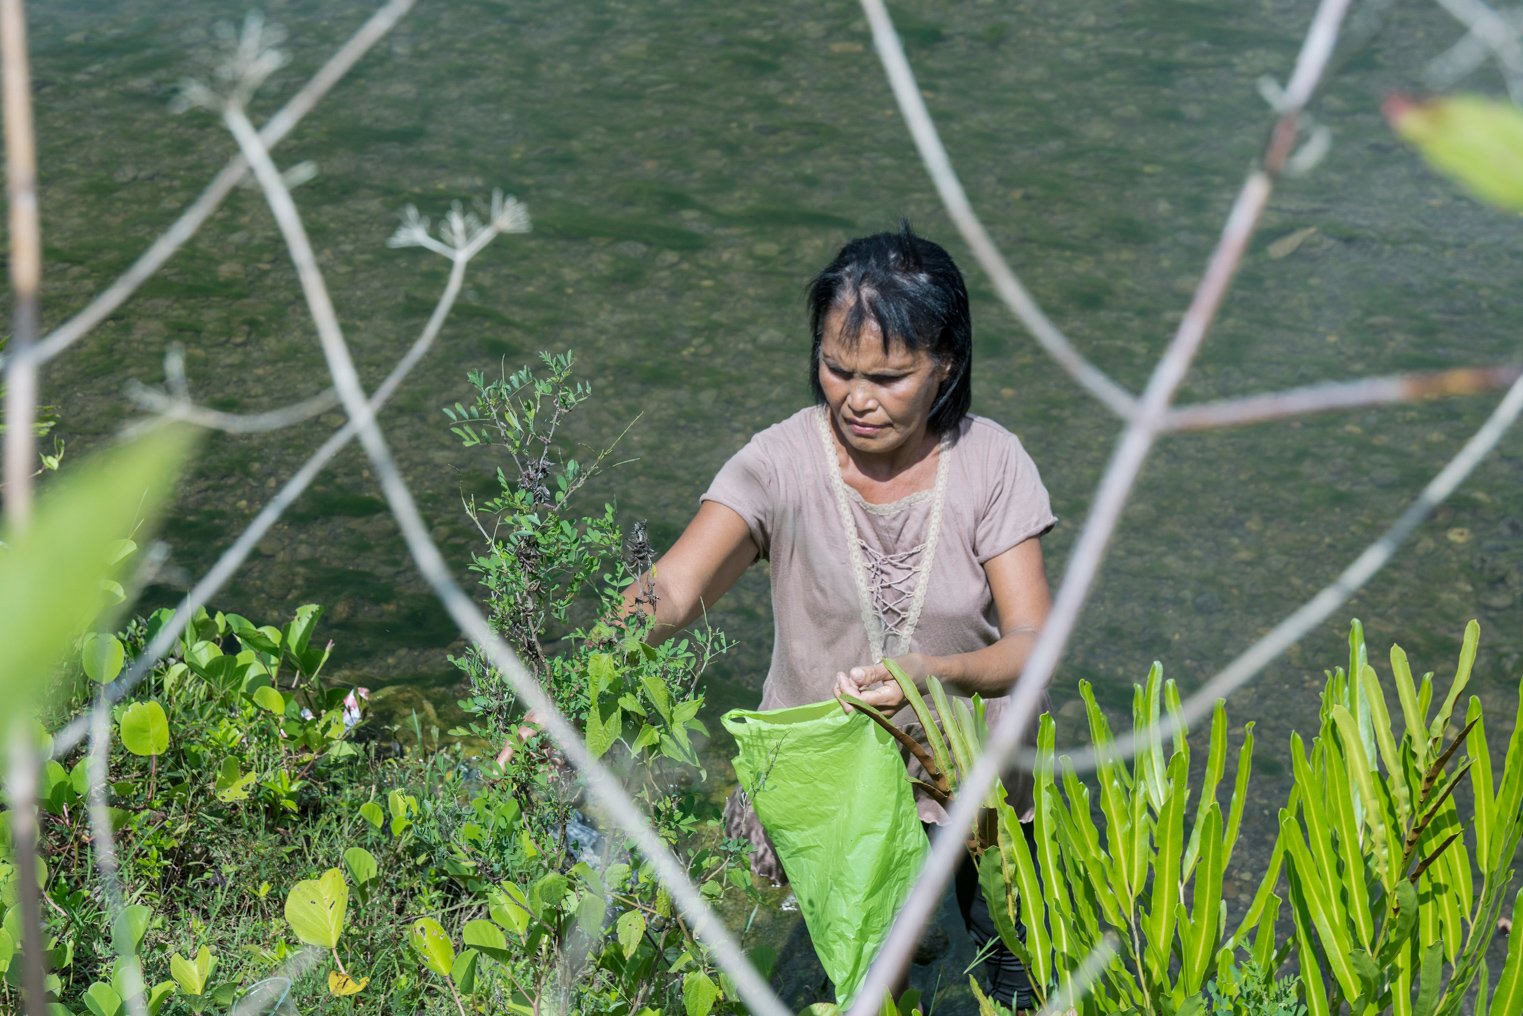 Anggota kelompok Ralsasam memetik daun taro yang digunakan sebagai pewarna alami kain tenun ikat Tanimbar, Ambon, Maluku. ANTARA FOTO/ FB Anggoro/AW.